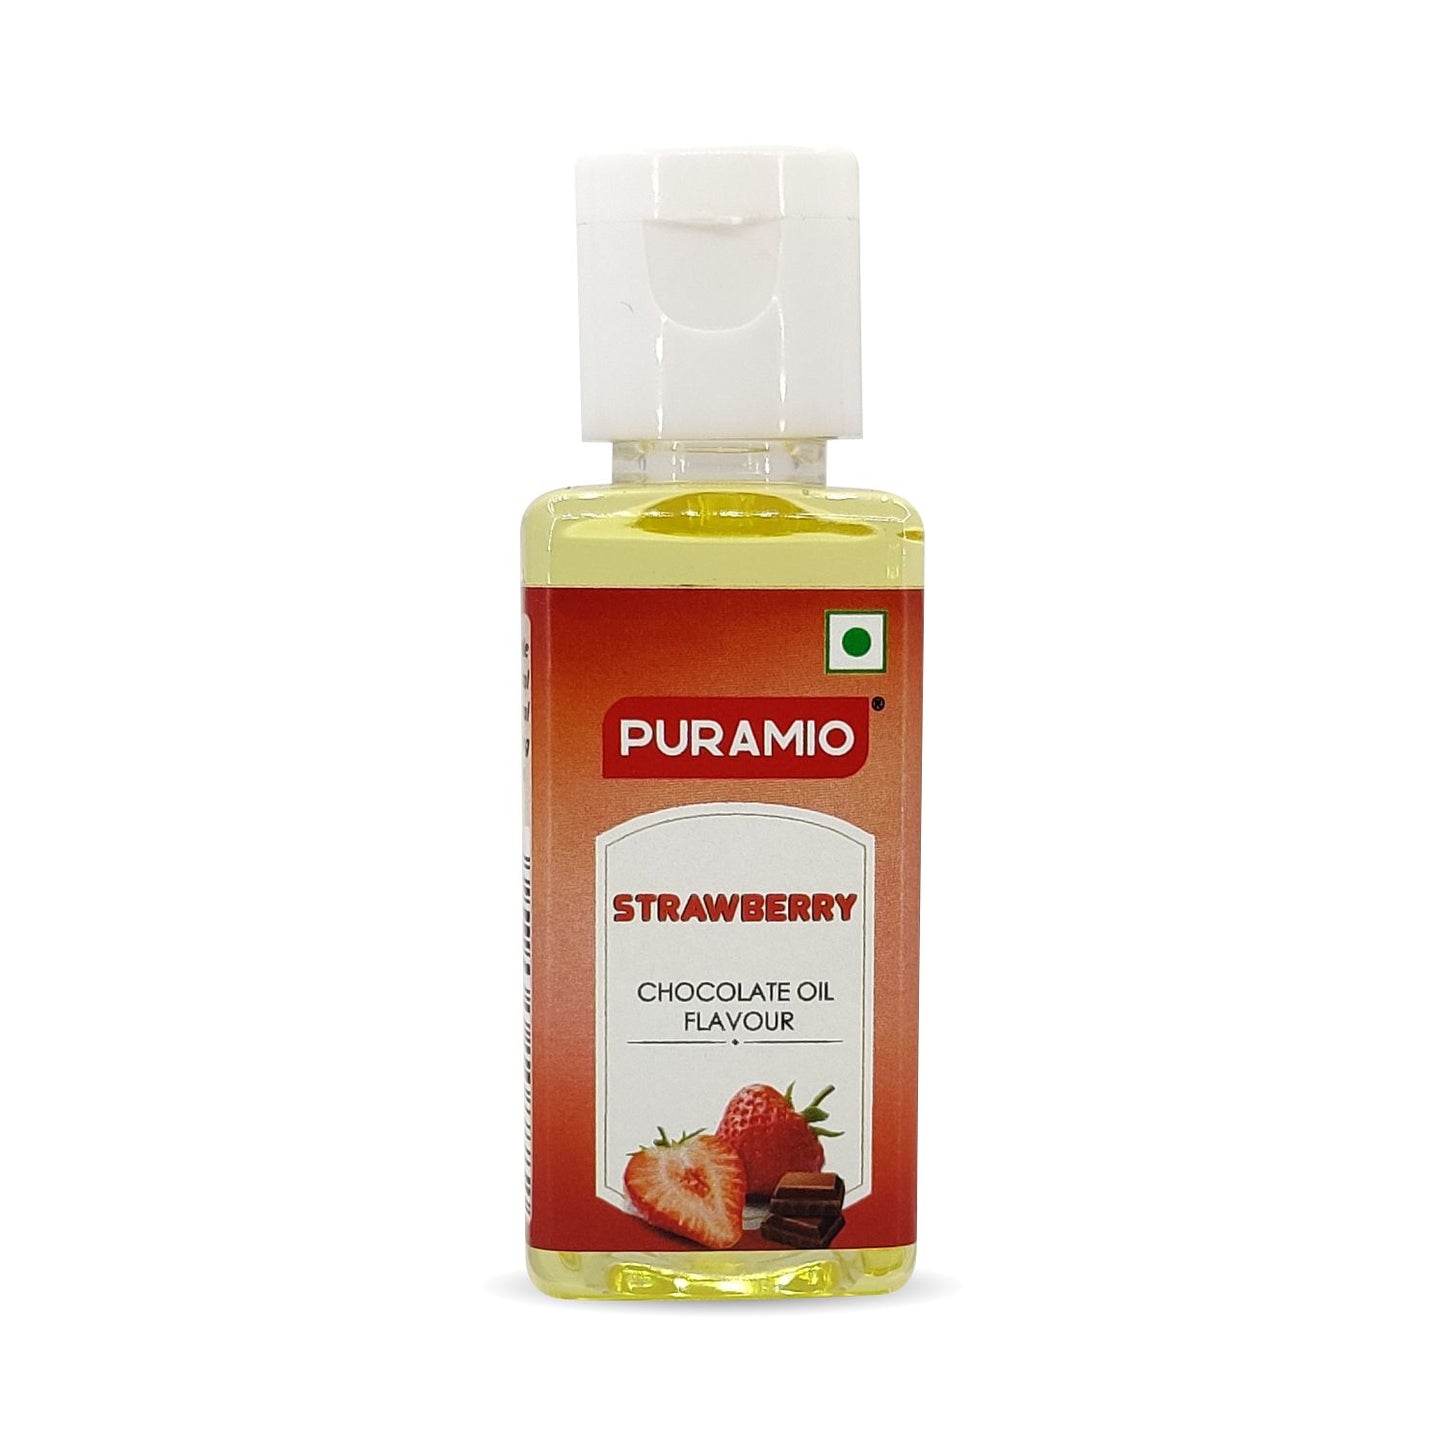 Puramio Chocolate Oil Flavour - Strawberry